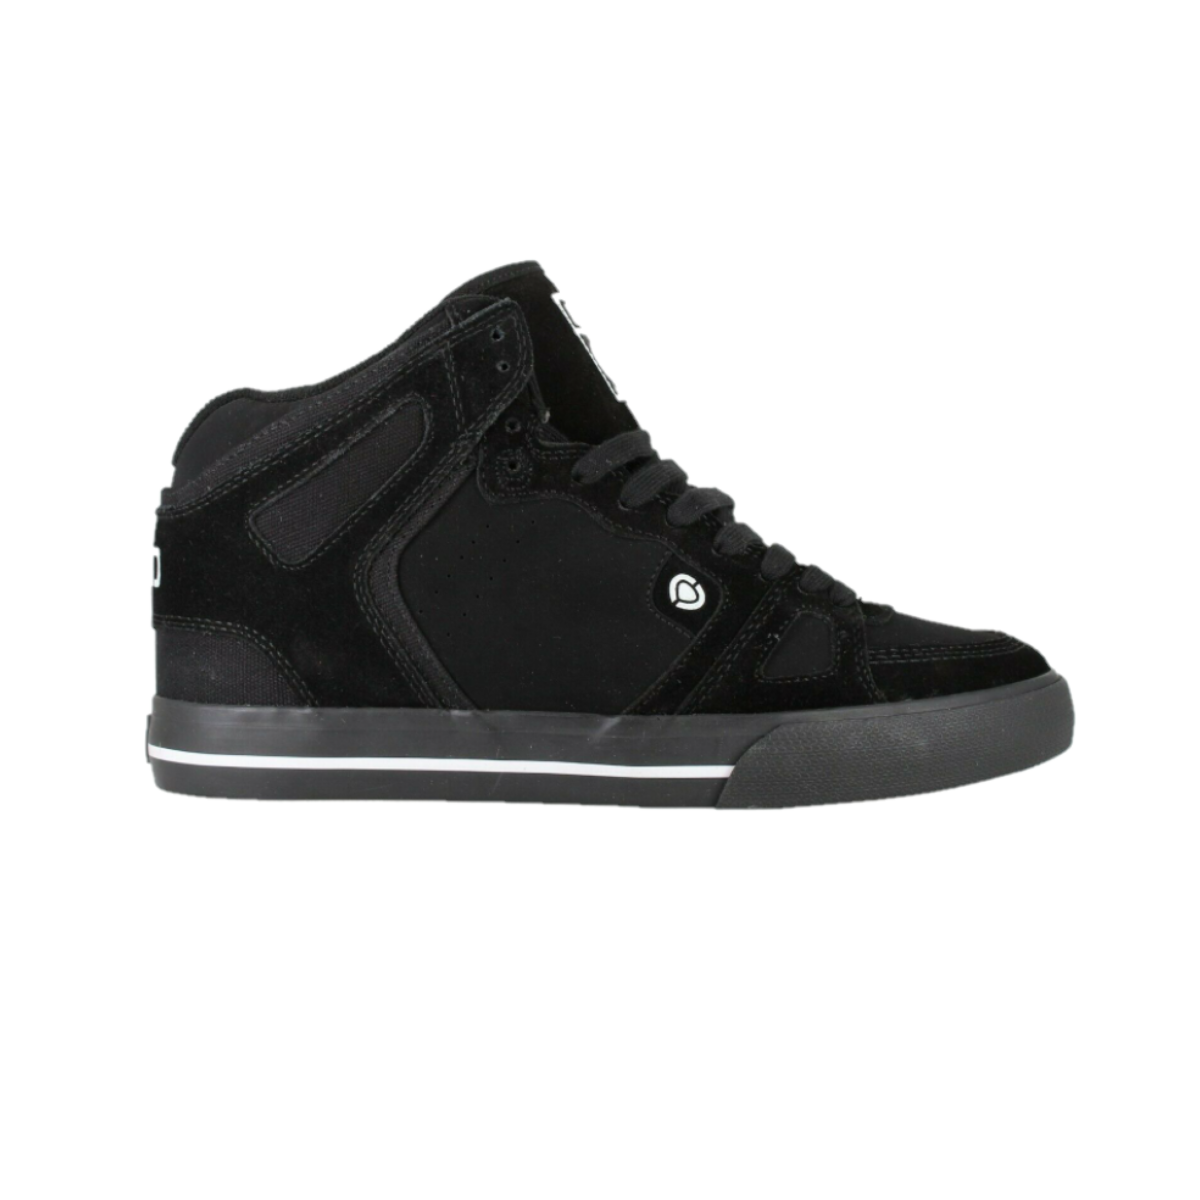 CIRCA 8113-480 99 VULC MN'S (Medium) Black/Black Suede Skate Shoes